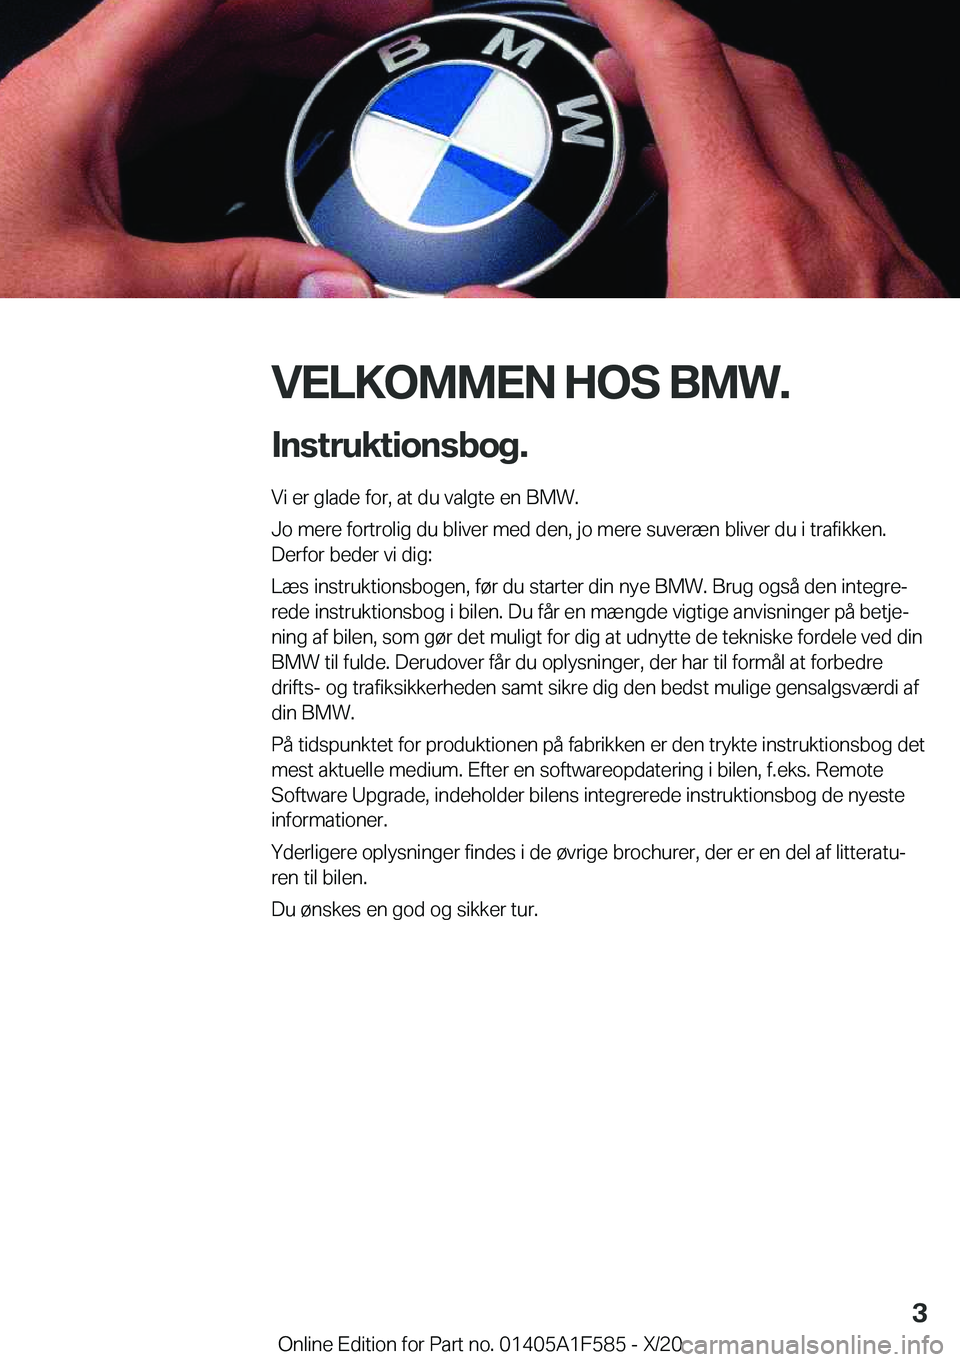 BMW X3 M 2021  InstruktionsbØger (in Danish) �V�E�L�K�O�M�M�E�N��H�O�S��B�M�W�.
�I�n�s�t�r�u�k�t�i�o�n�s�b�o�g�. �V�i��e�r��g�l�a�d�e��f�o�r�,��a�t��d�u��v�a�l�g�t�e��e�n��B�M�W�.
�J�o��m�e�r�e��f�o�r�t�r�o�l�i�g��d�u��b�l�i�v�e�r�